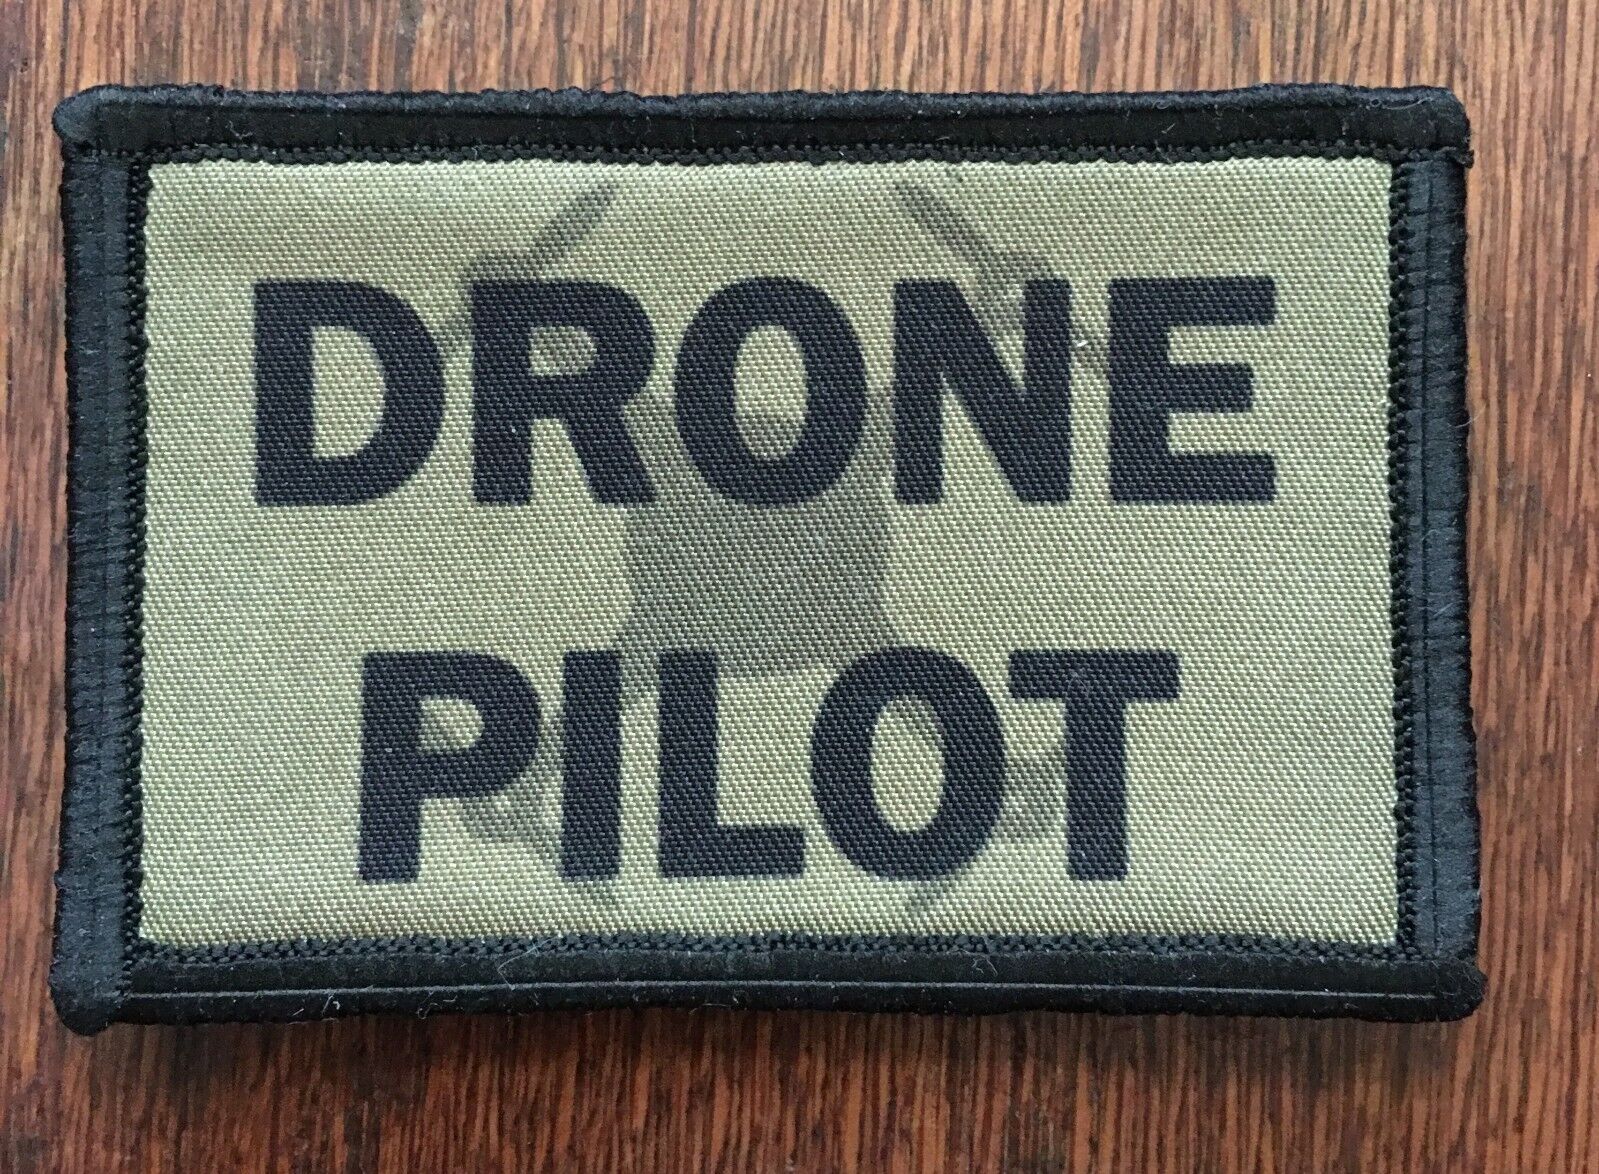  Drone Pilot Morale Patch Tactical Military Army USA  DJI Phantom Spark Mavic